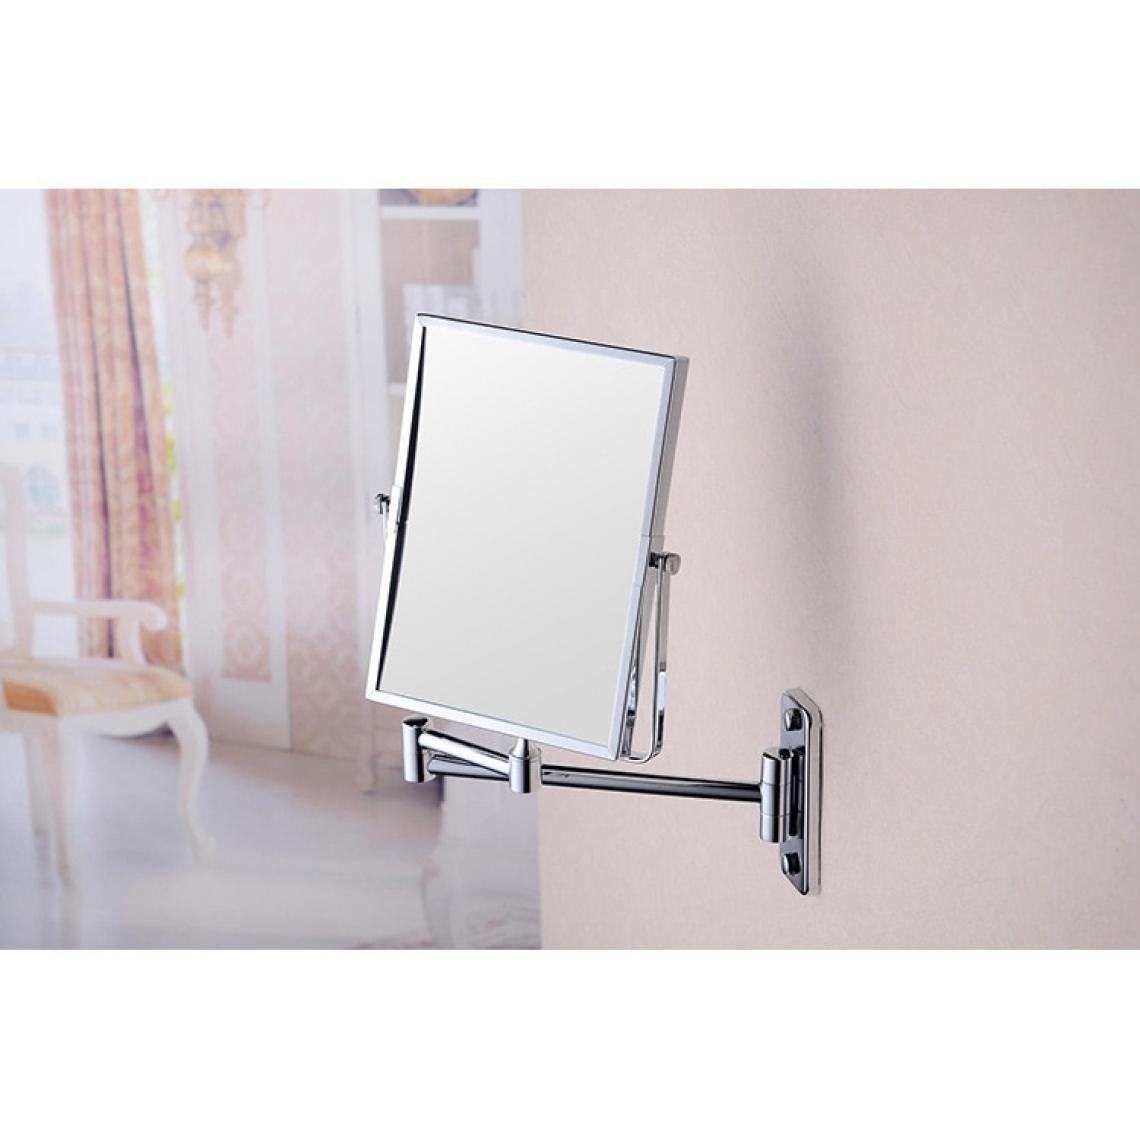 Universal - Montage mural salle de bains miroir pliant espace aluminium miroir rétractable double face 3x loupe miroir de rasage | miroir de bain(Argent) - Miroir de salle de bain